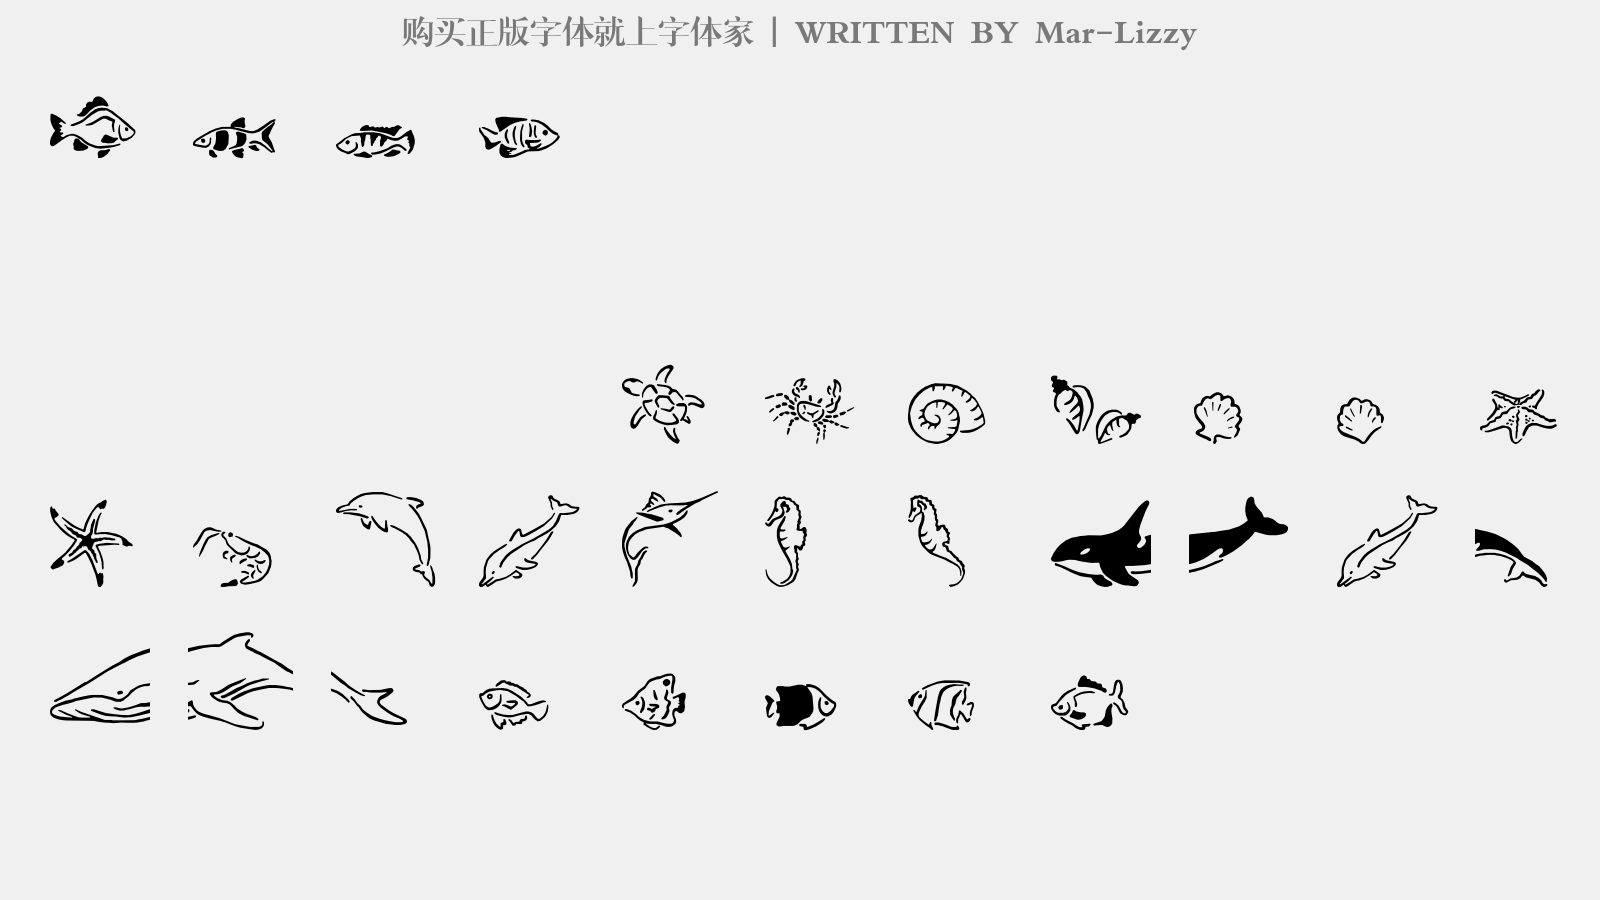 Mar-Lizzy - 大写字母/小写字母/数字